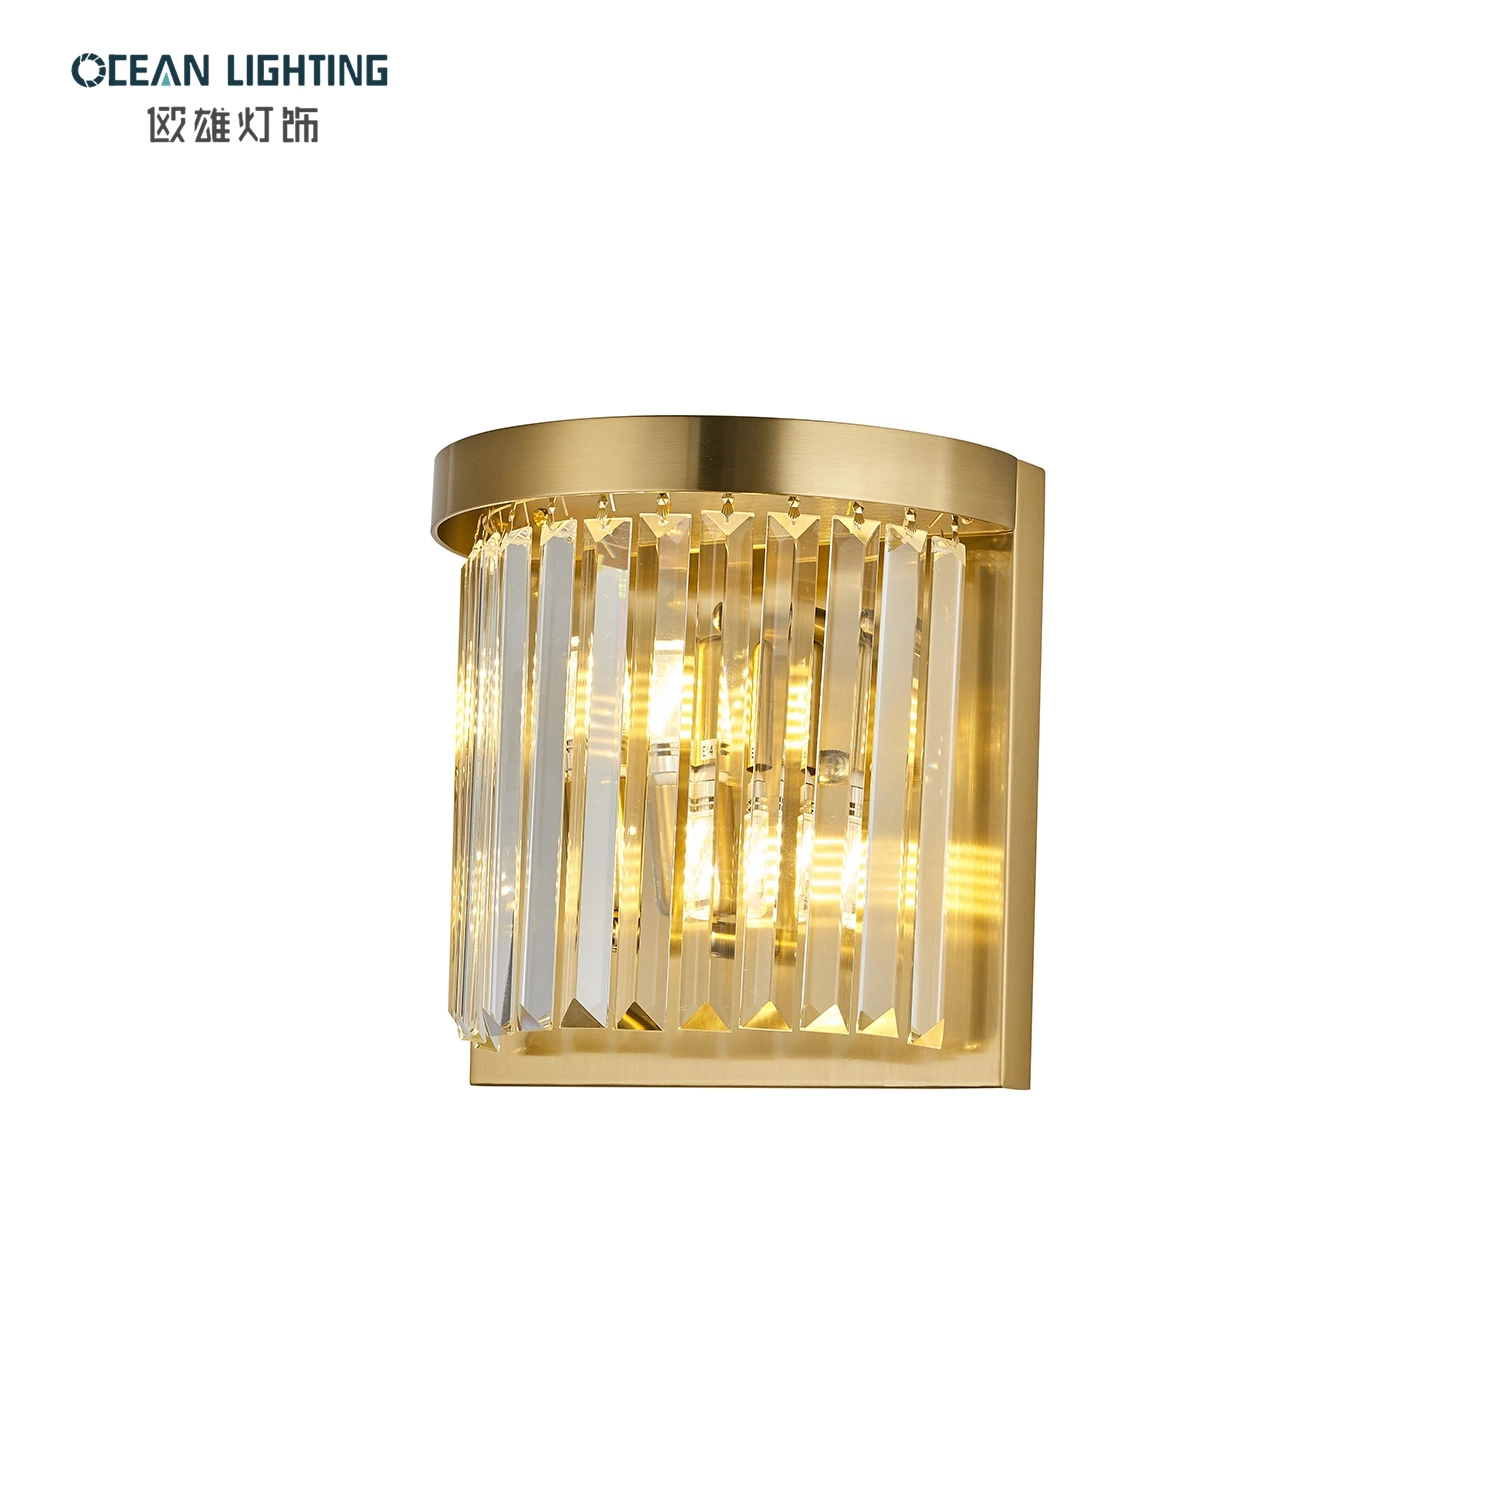 Ocean Lighting Moderninterior Lighting Hängeleuchter Hängelampen Luxus Kristall